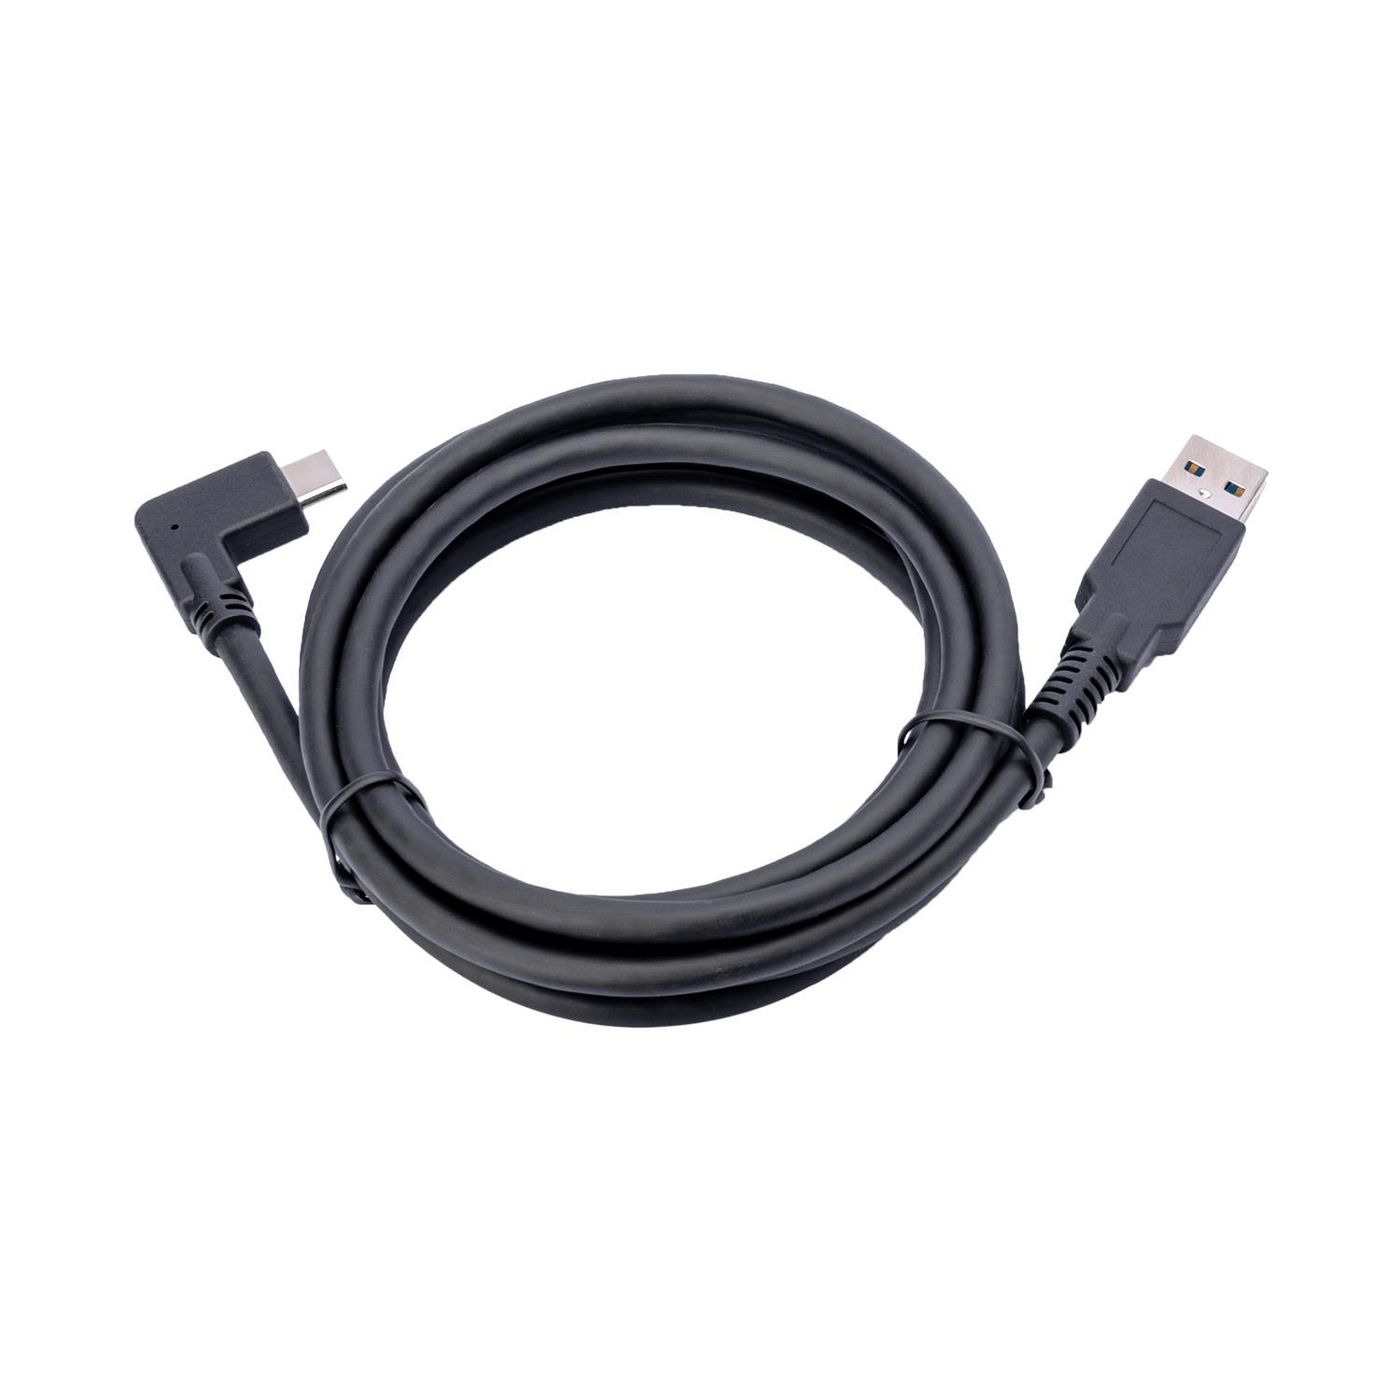 GN NETCOM JABRA Panacast USB Cable 1,8m